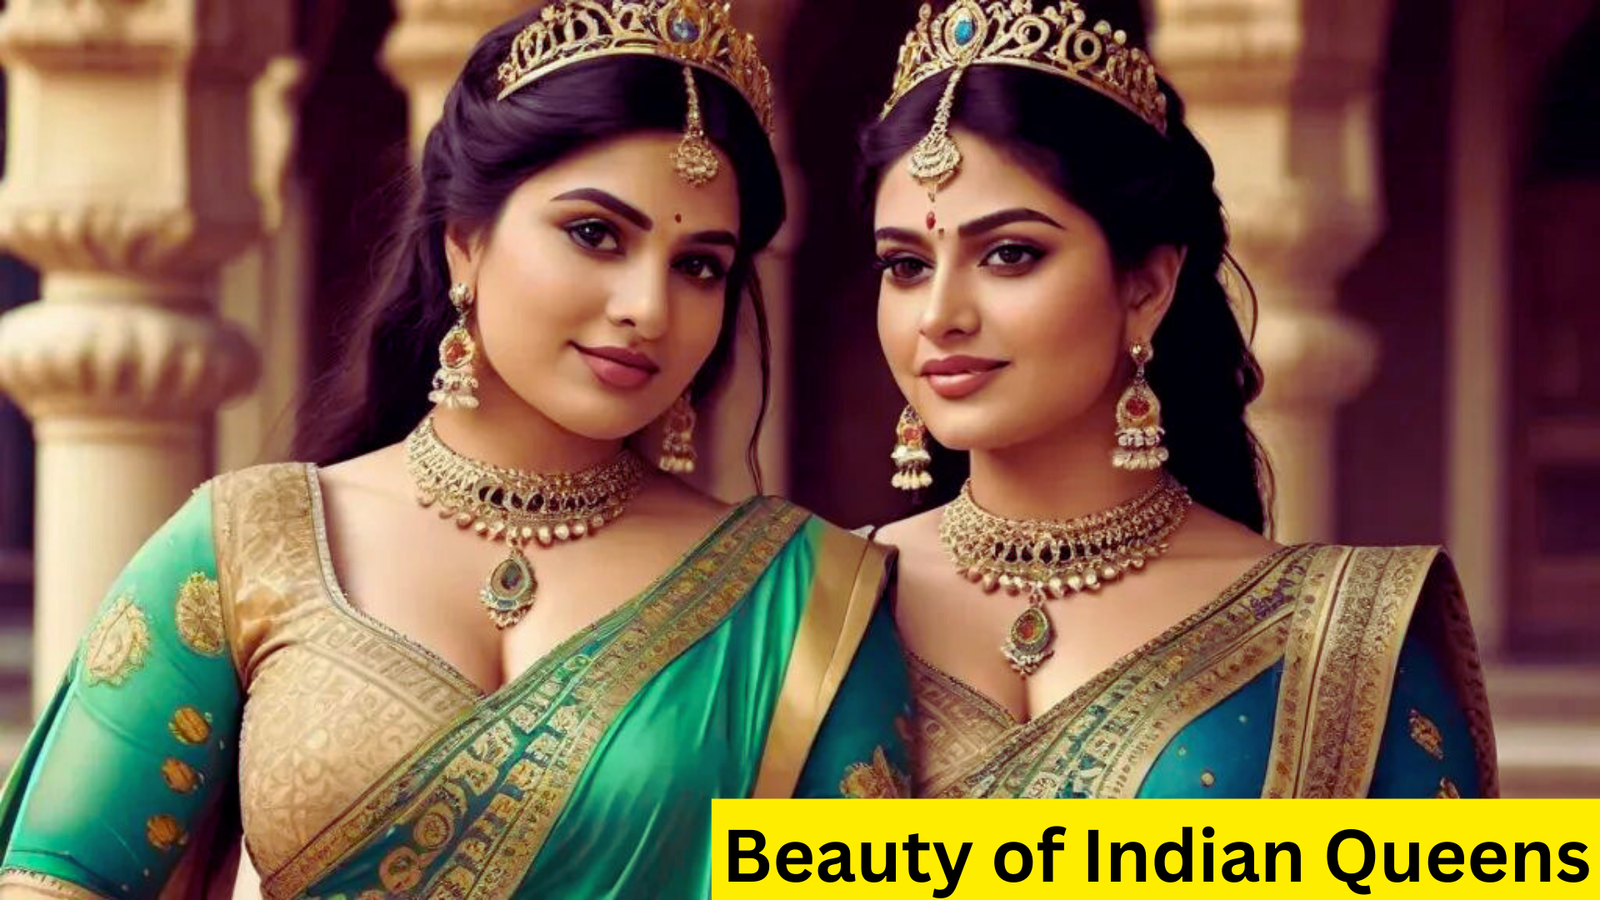 10 beautiful indian queens in history